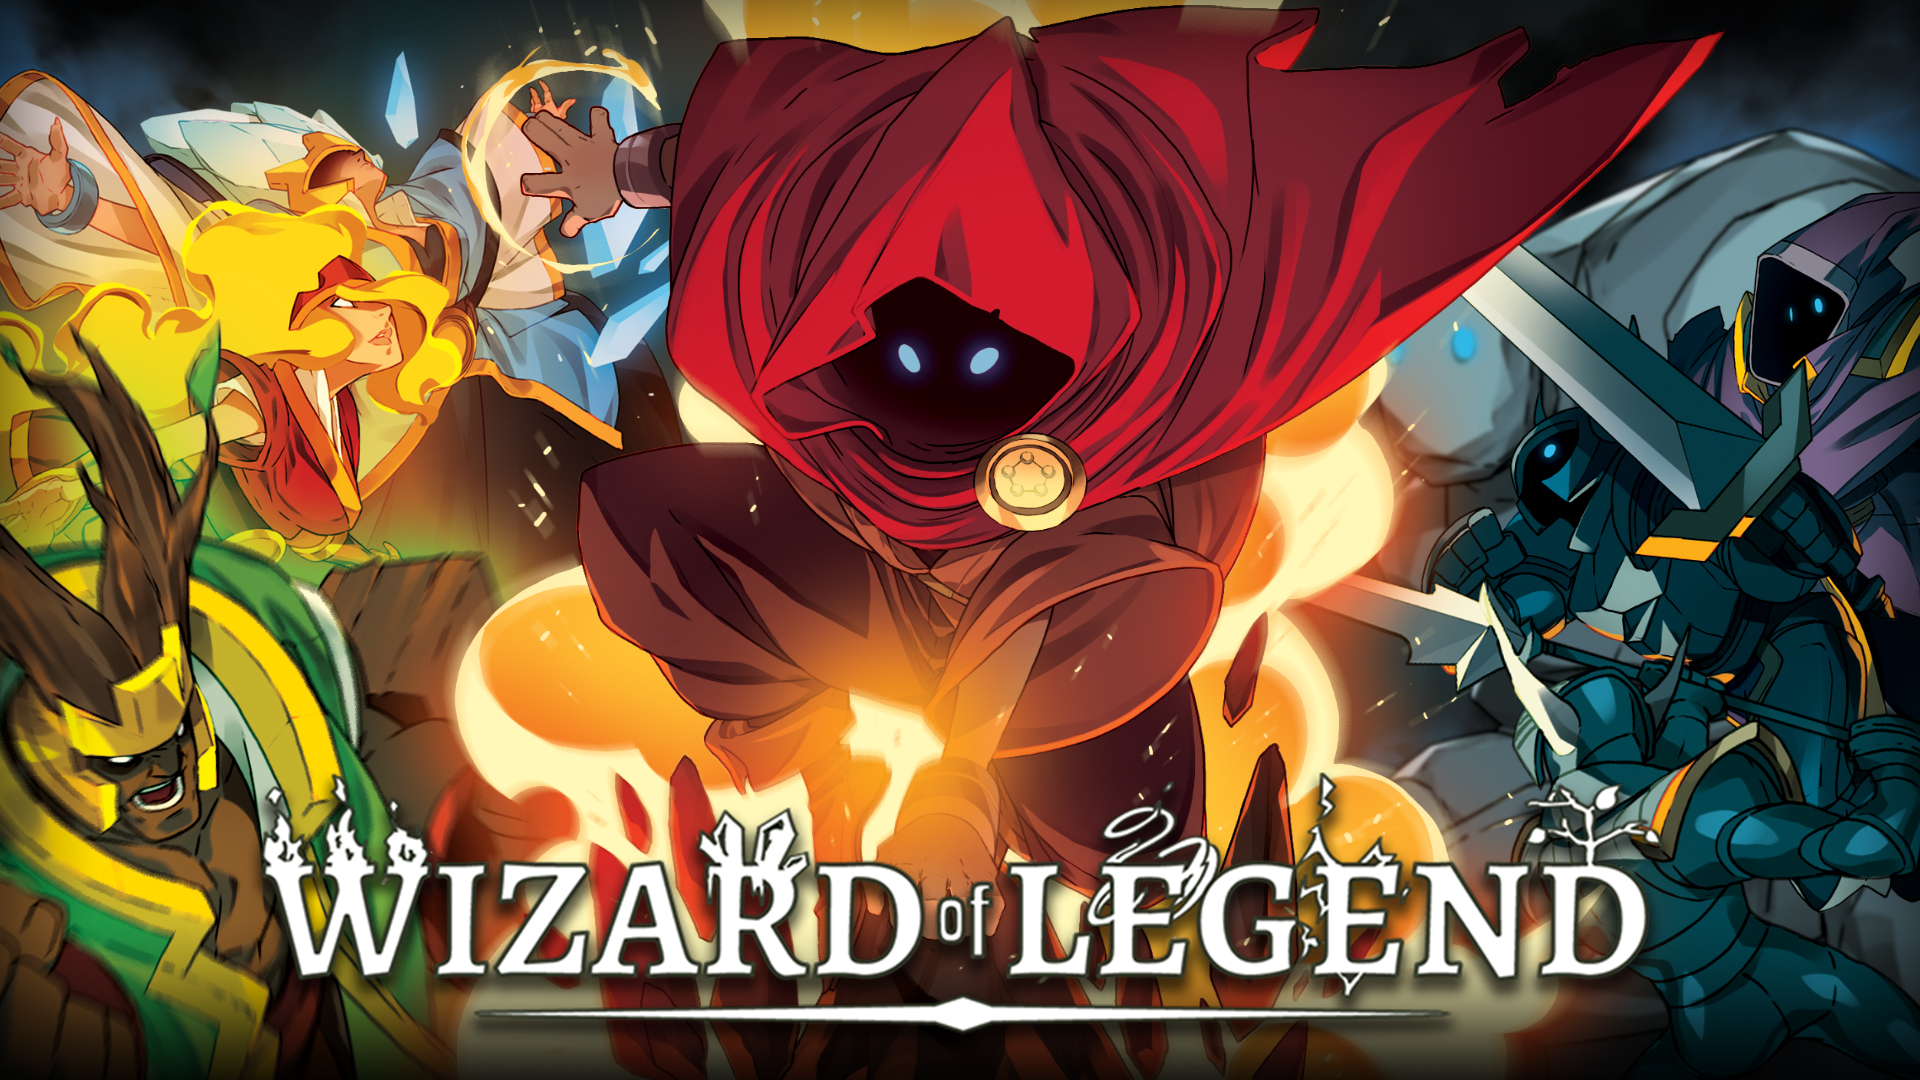 Wizard of Legend 日本語攻略 Wiki